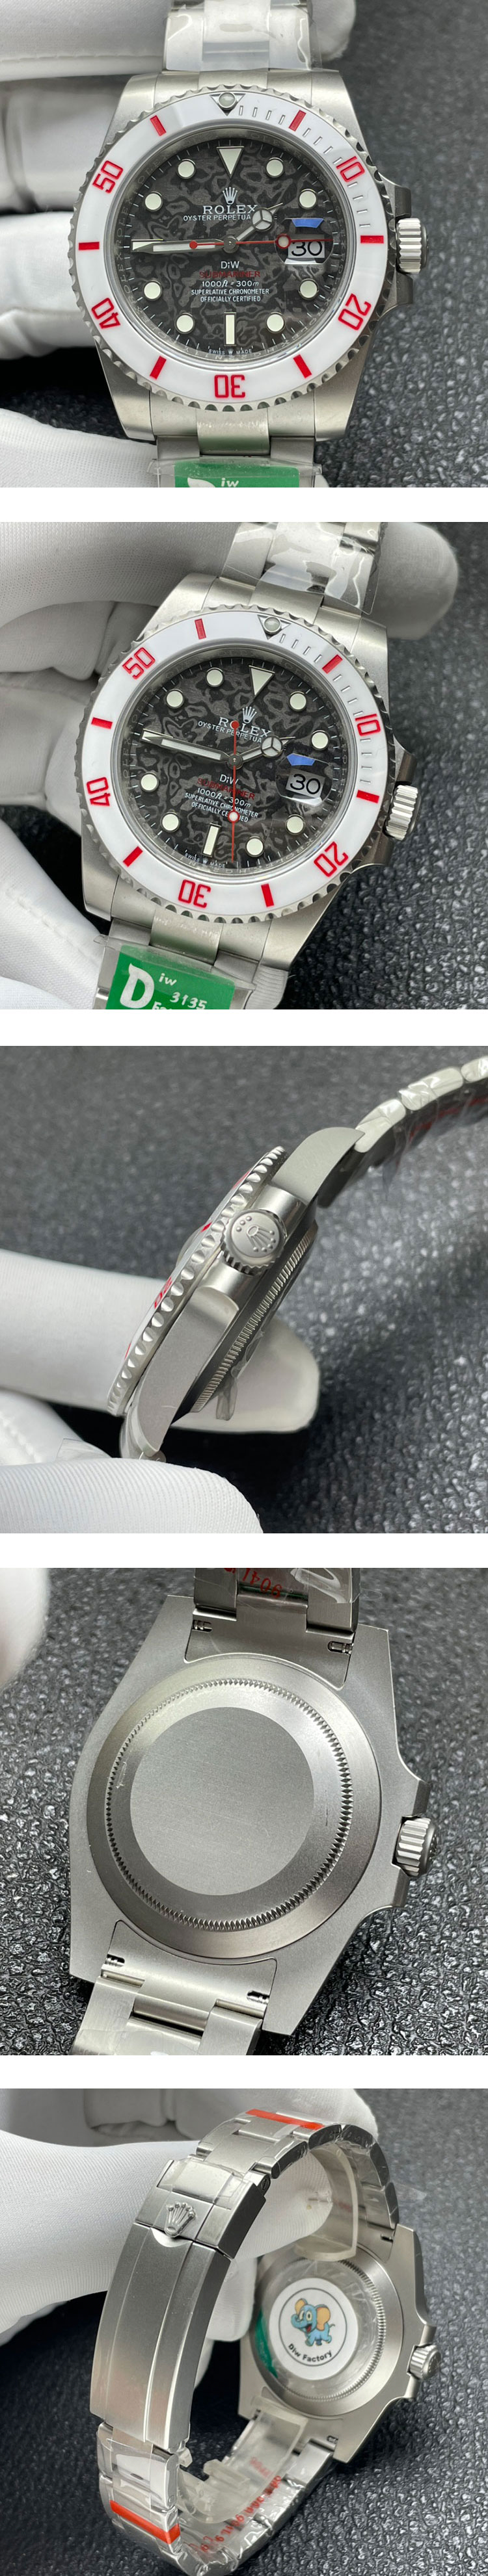 DIWのメンズ腕時計ロレックス サブマリーナーコピー  3135ムーブ Automatic特別モデル